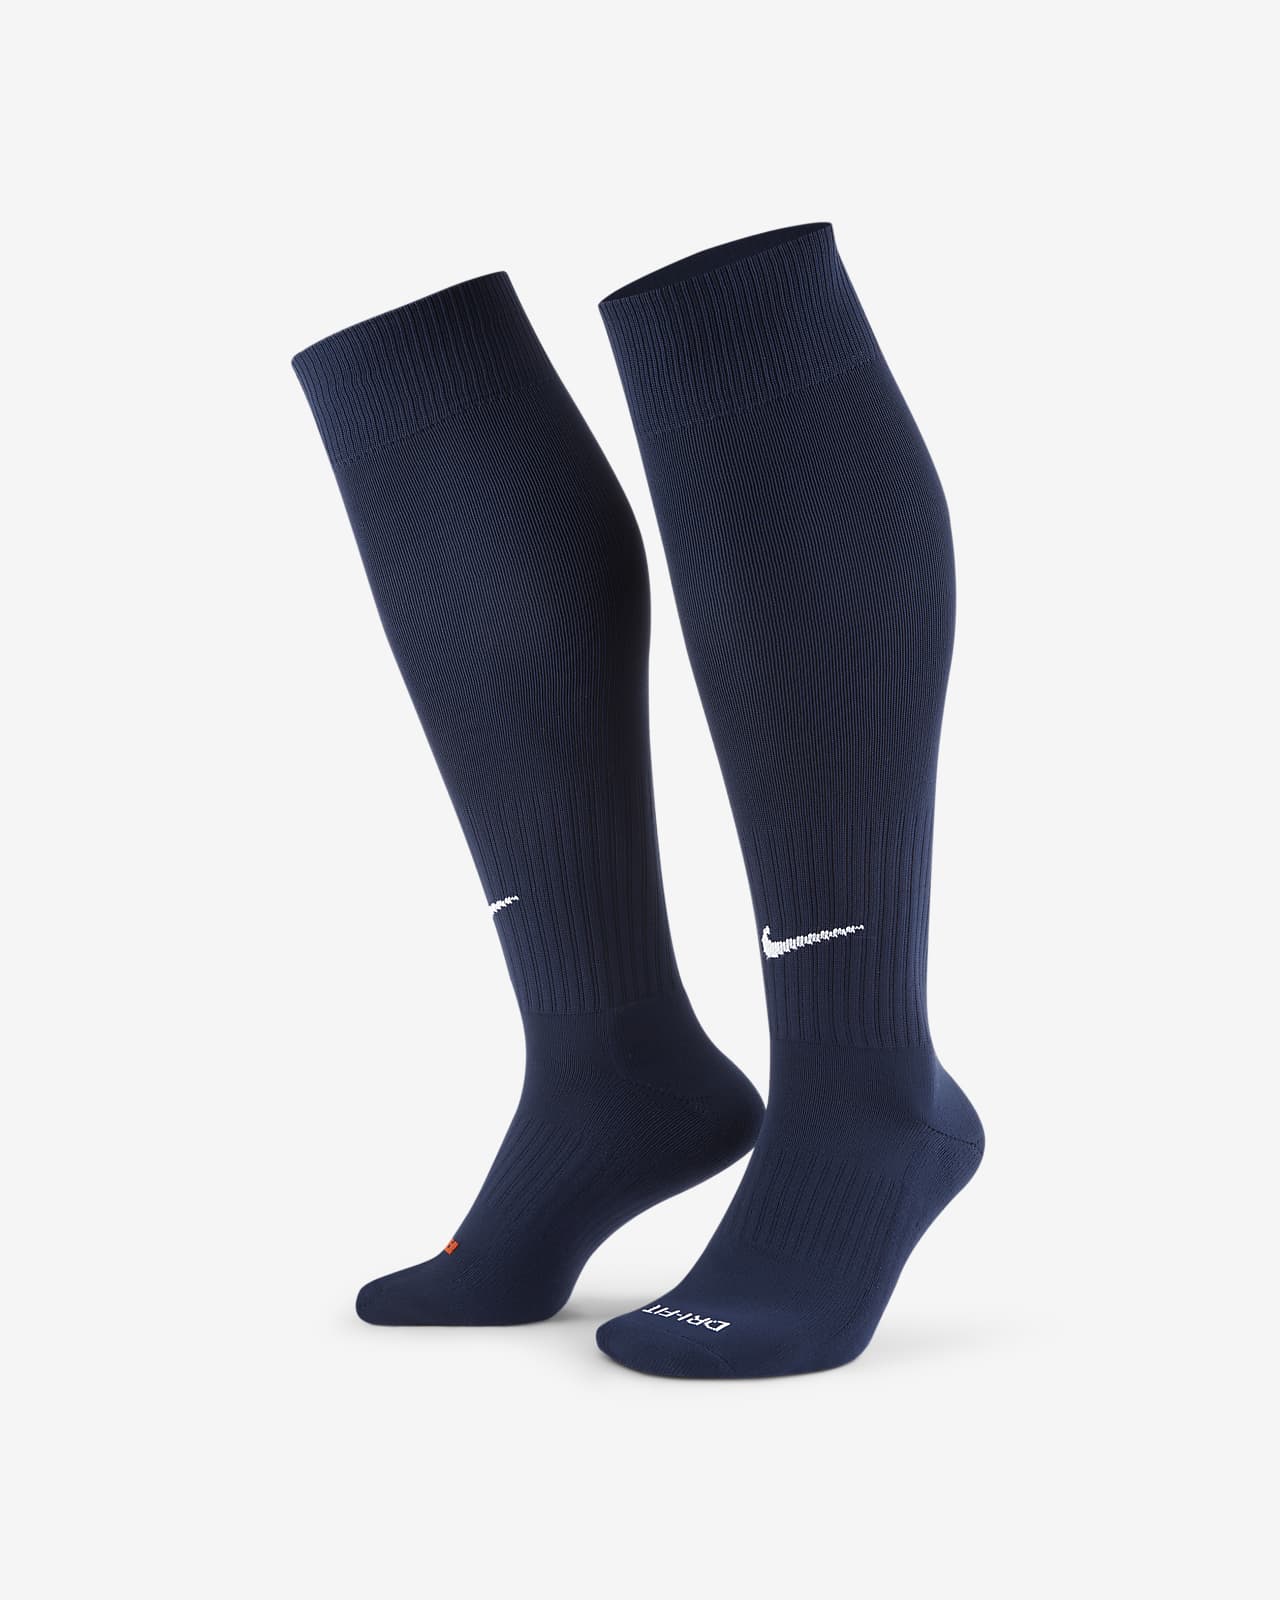 Nike Academy Over-The-Calf Football Socks